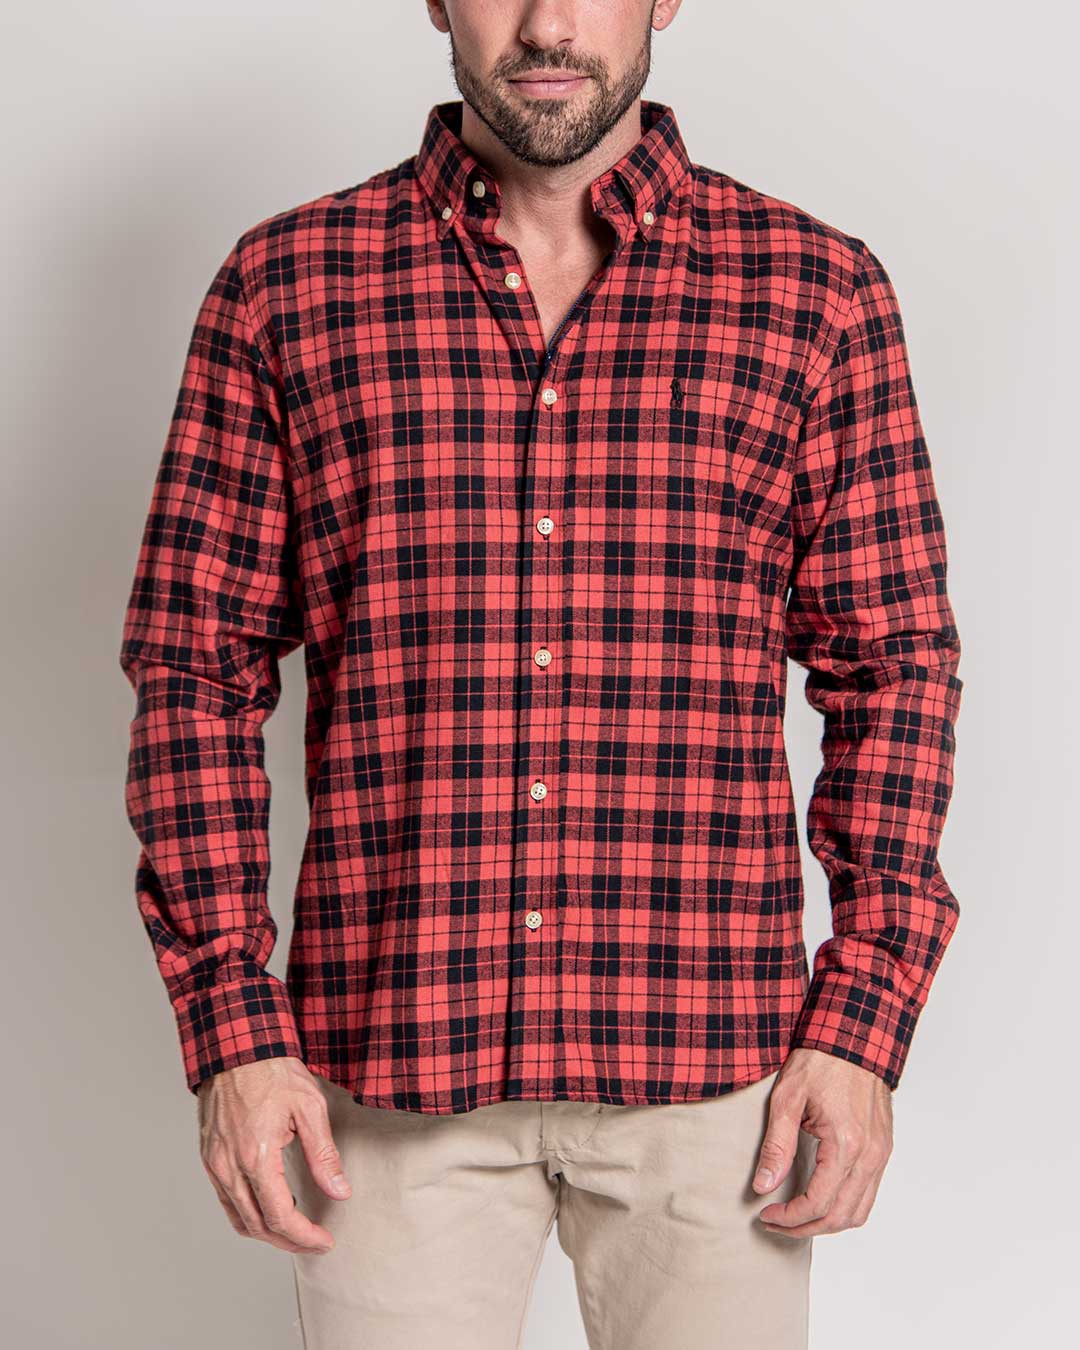 Camisa Social Masculina Ralph Lauren Flanela Xadrez Vermelha - Sale -  Outweb - Outlet de Roupas, Calçados e Acessórios.